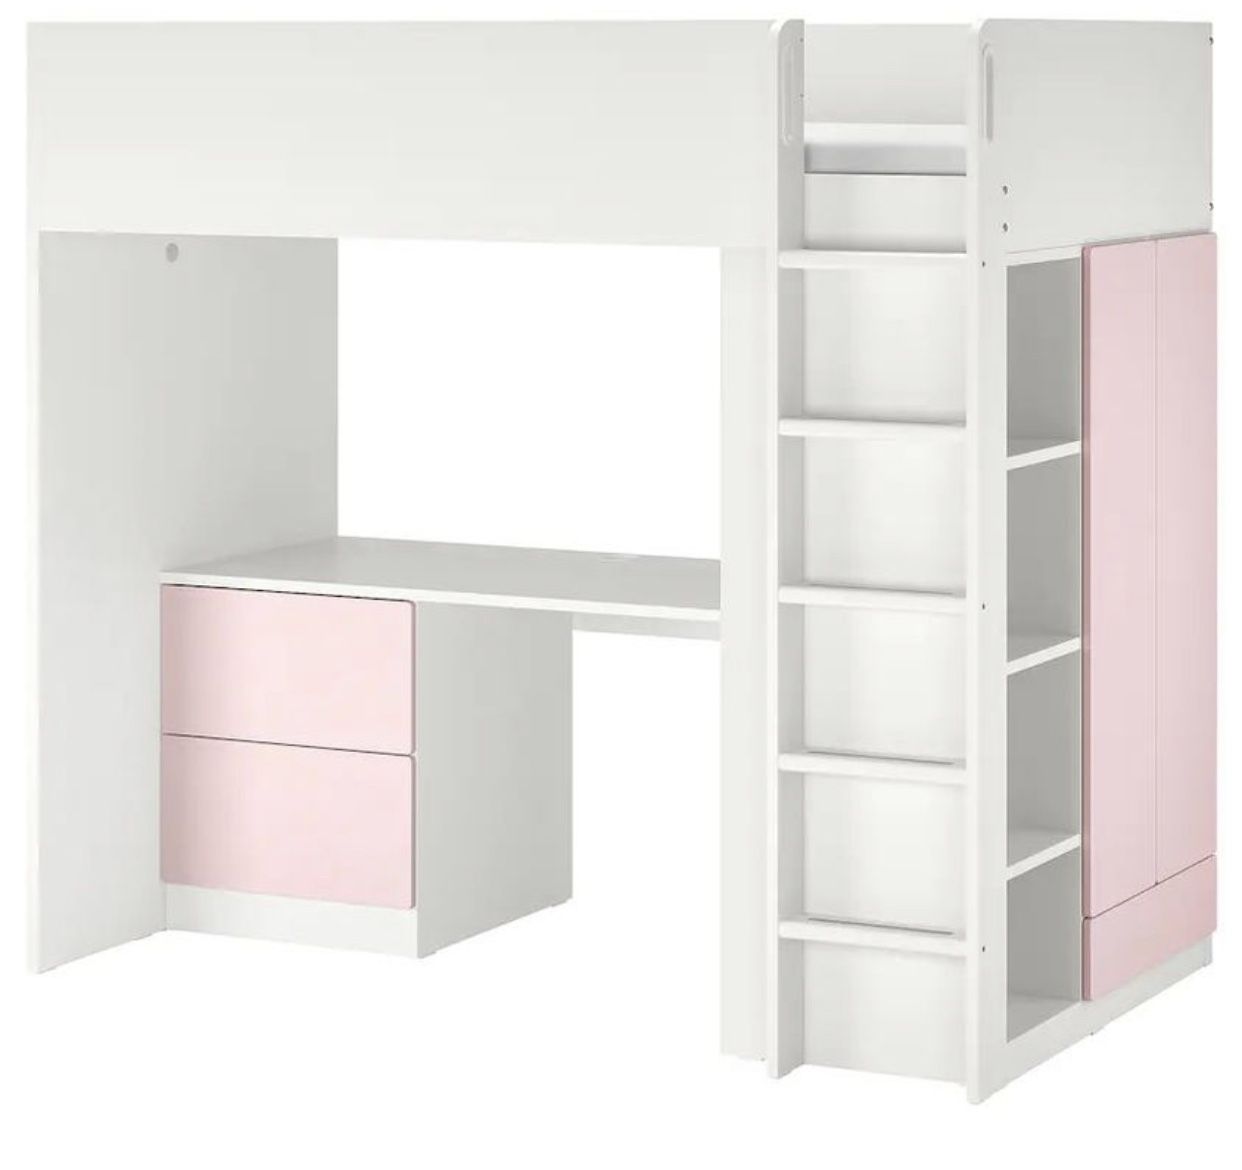 IKEA SMASTAD TWIN SIZE LOFT BED W/ MATTRESS, DESK, CLOSET & CHAIR